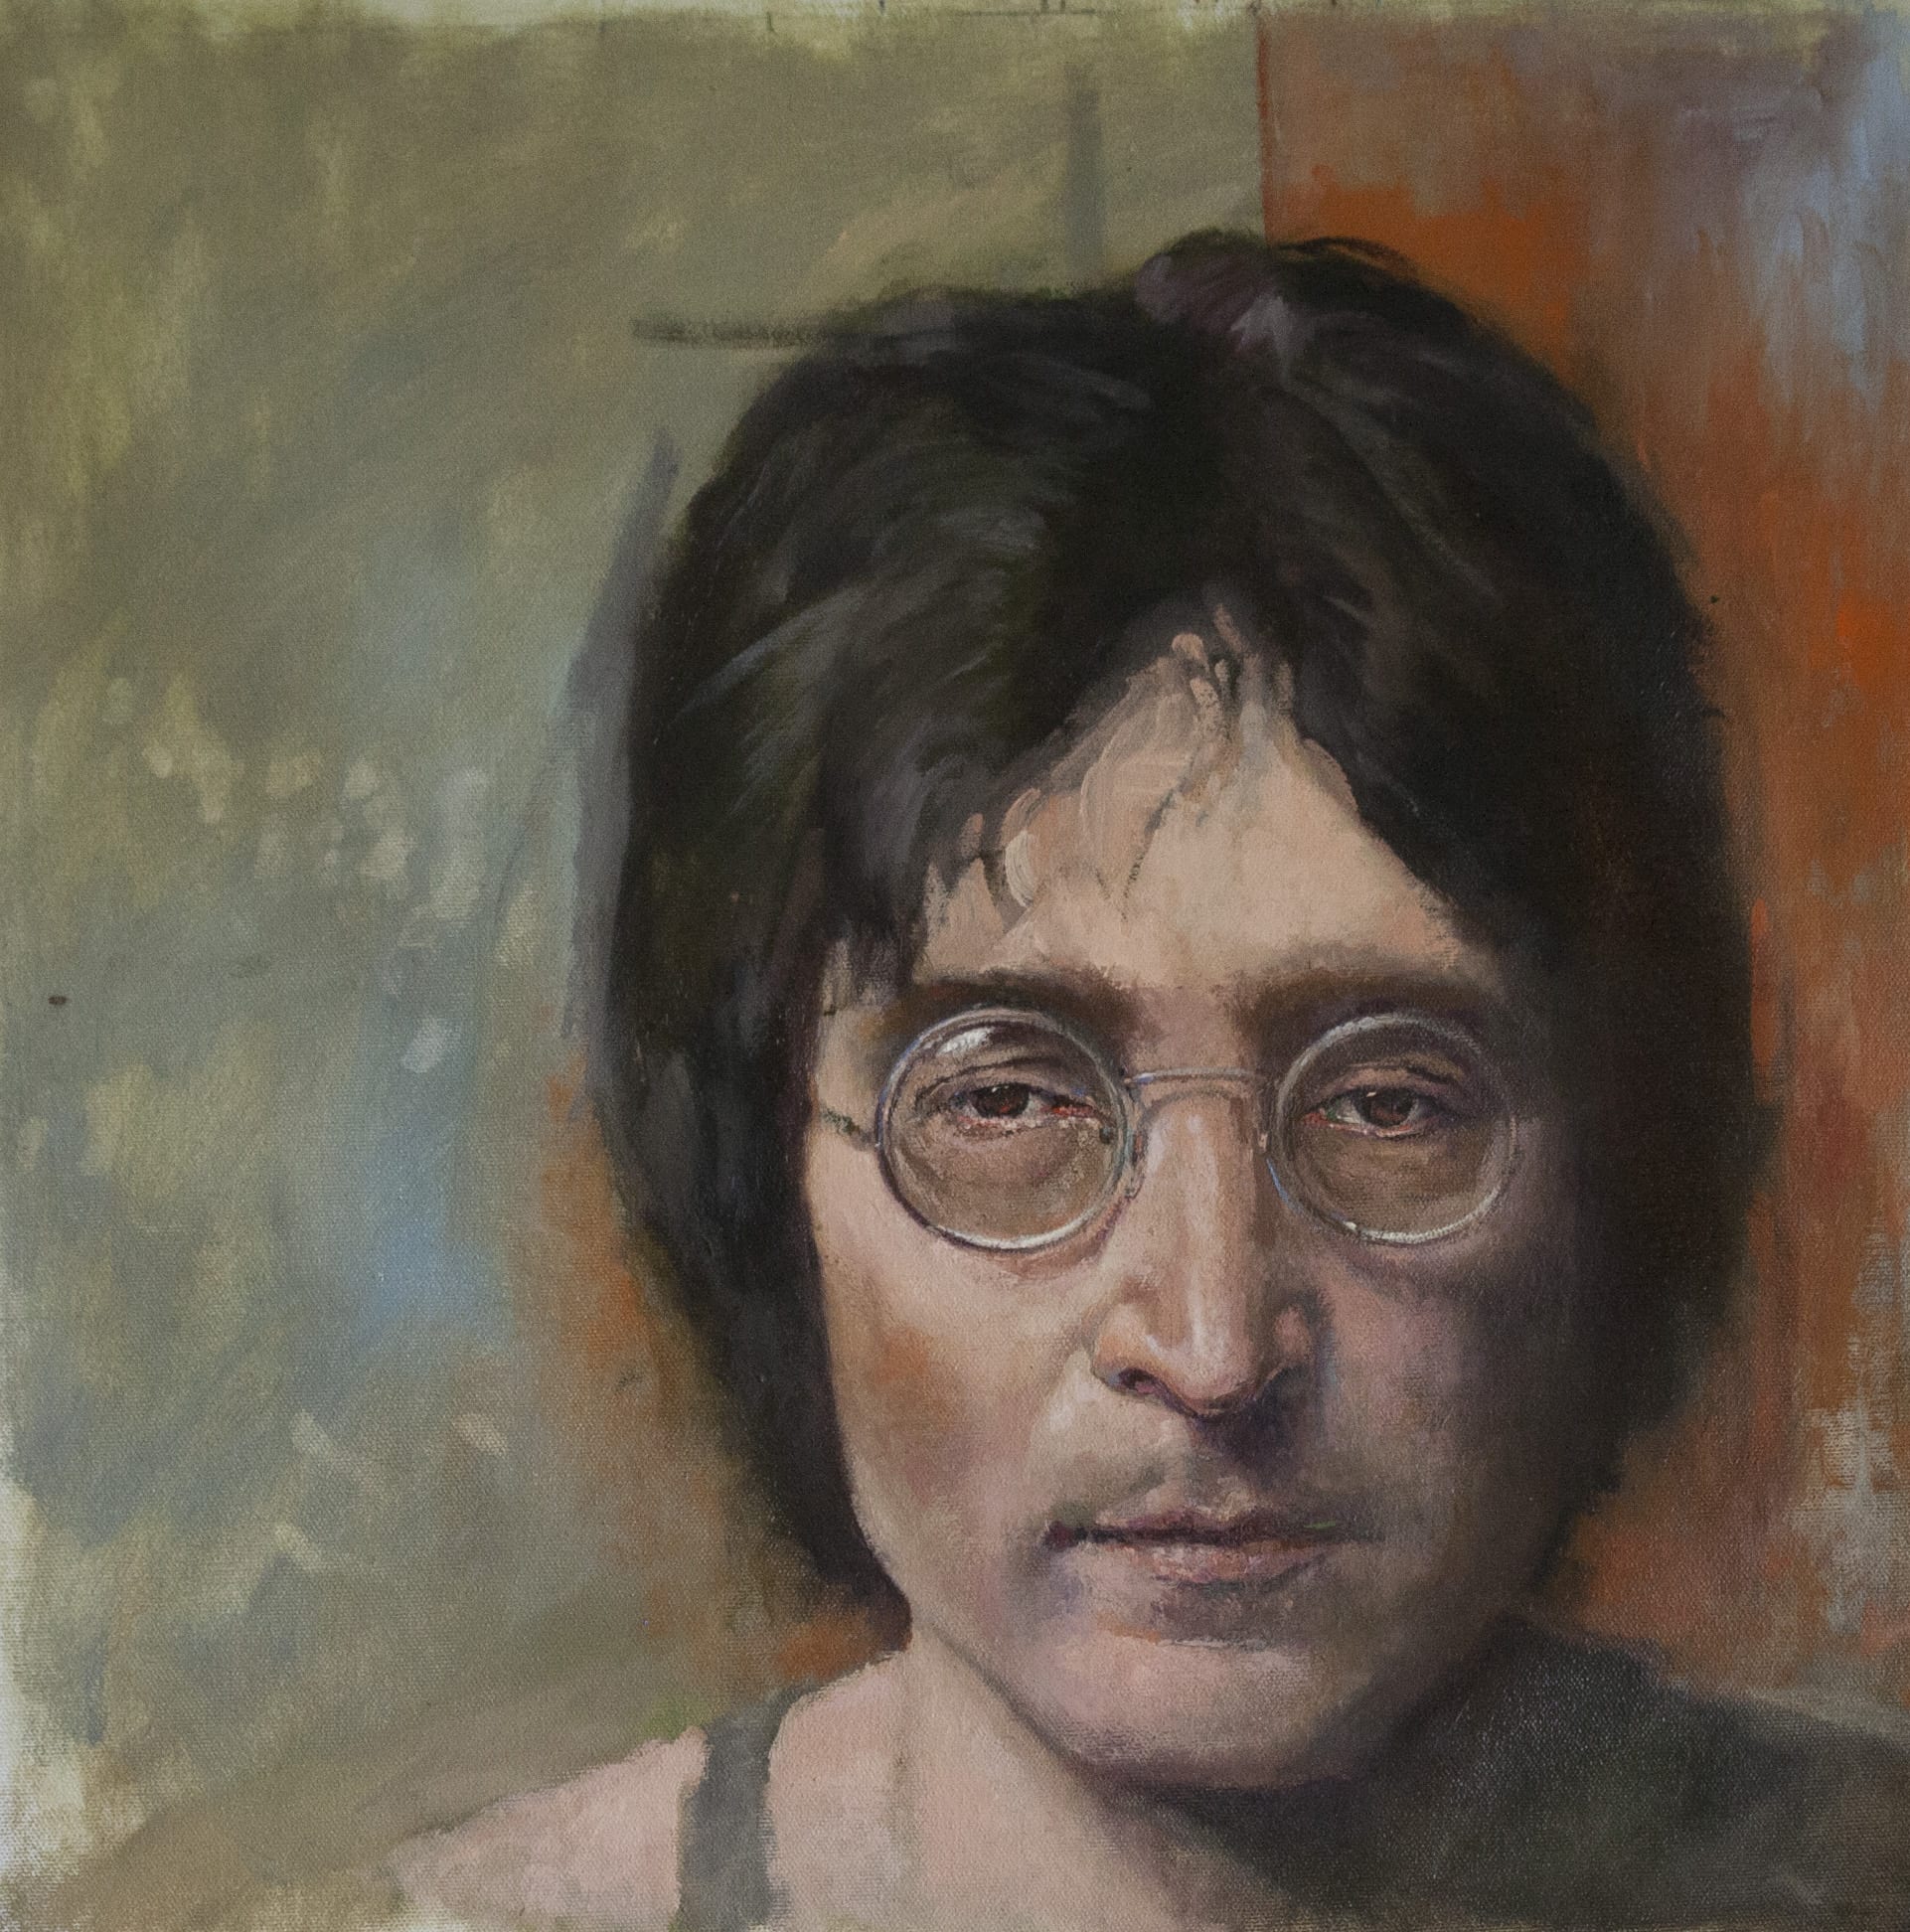 Professor Zeggert’s Lennon painting on exhibit in NYC